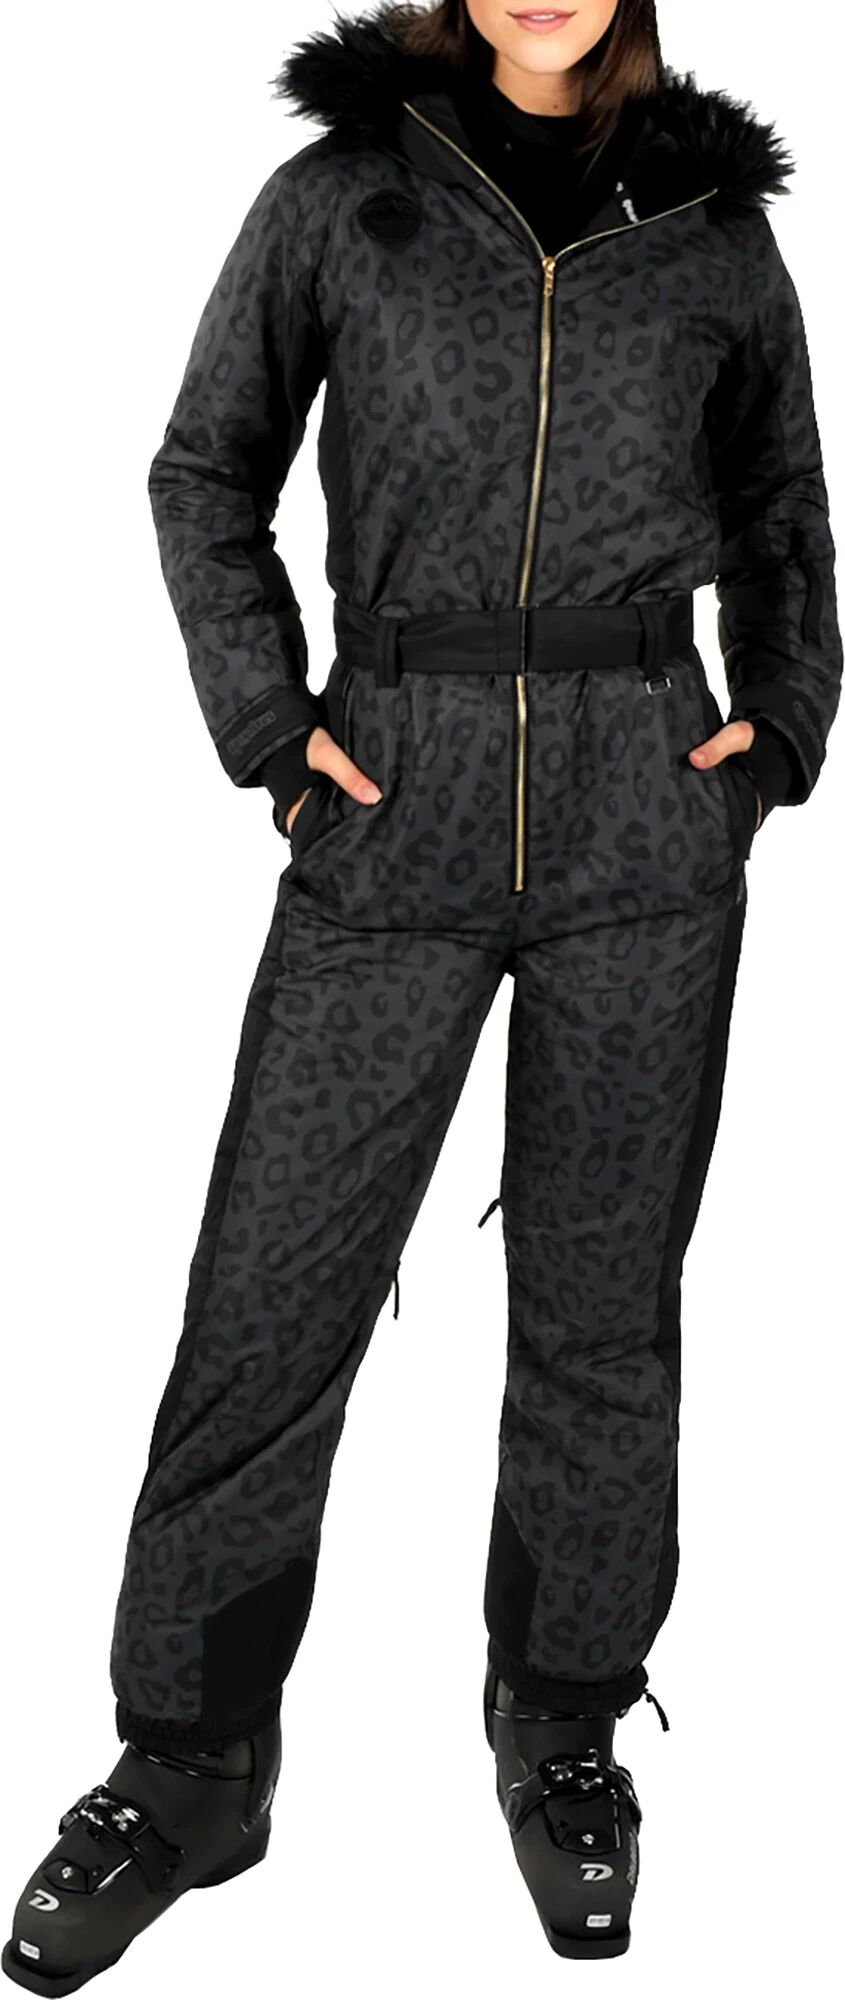 Photos - Ski Wear Leopard Tipsy Elves Women's Midnight  Snow Suit, Large, Black 22dbpwwmdnght 